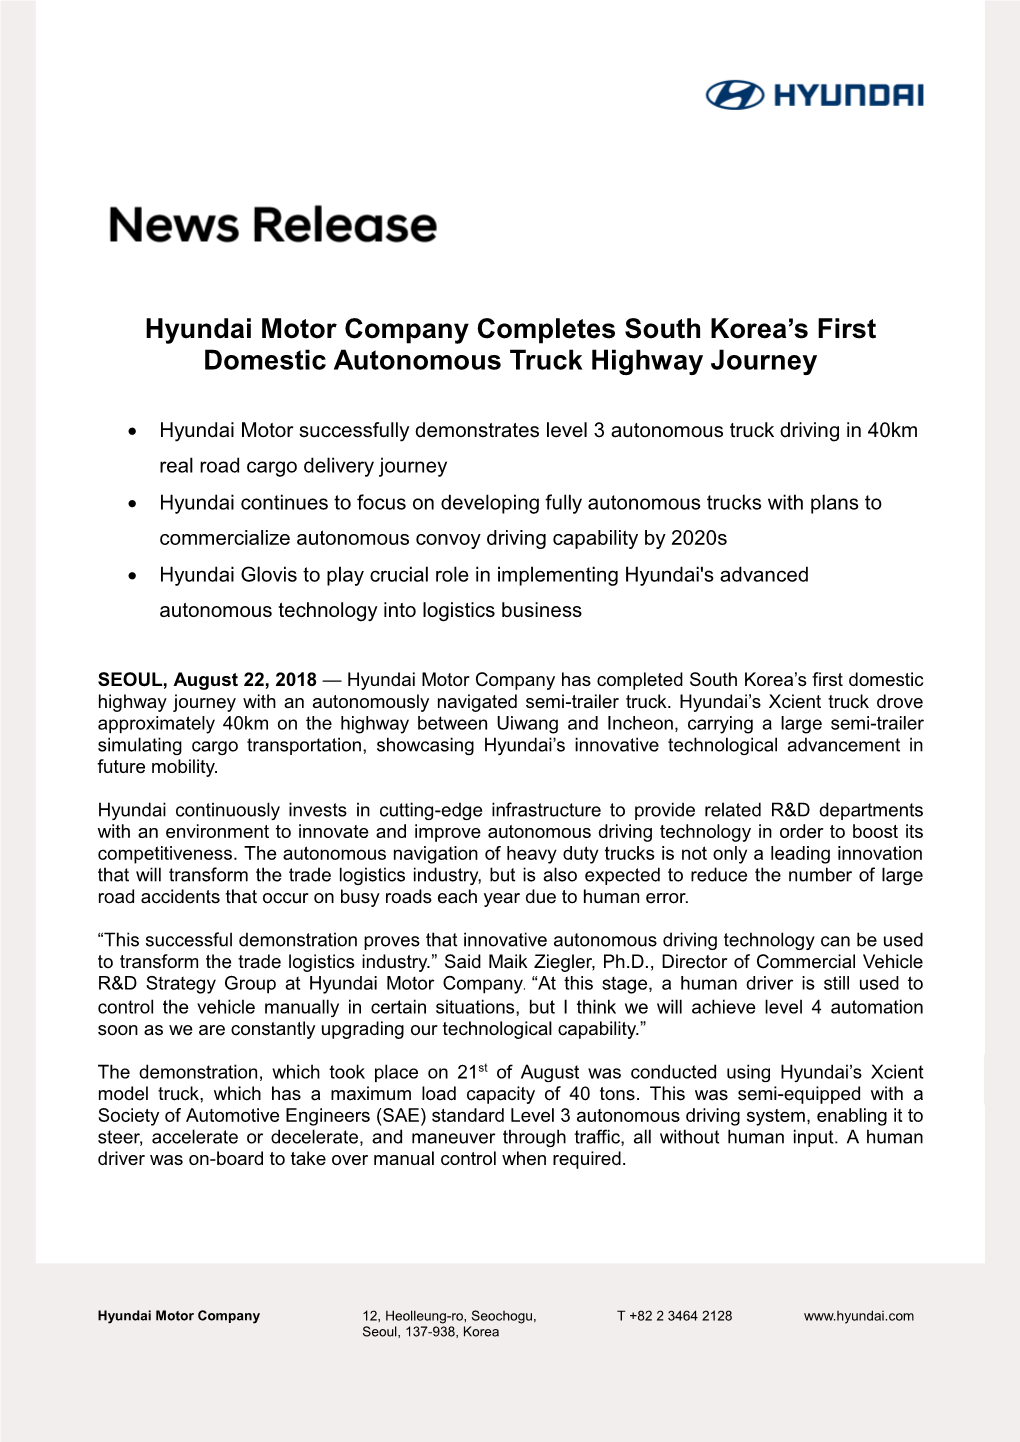 Hyundai Motor Company Completes South Korea's First Domestic